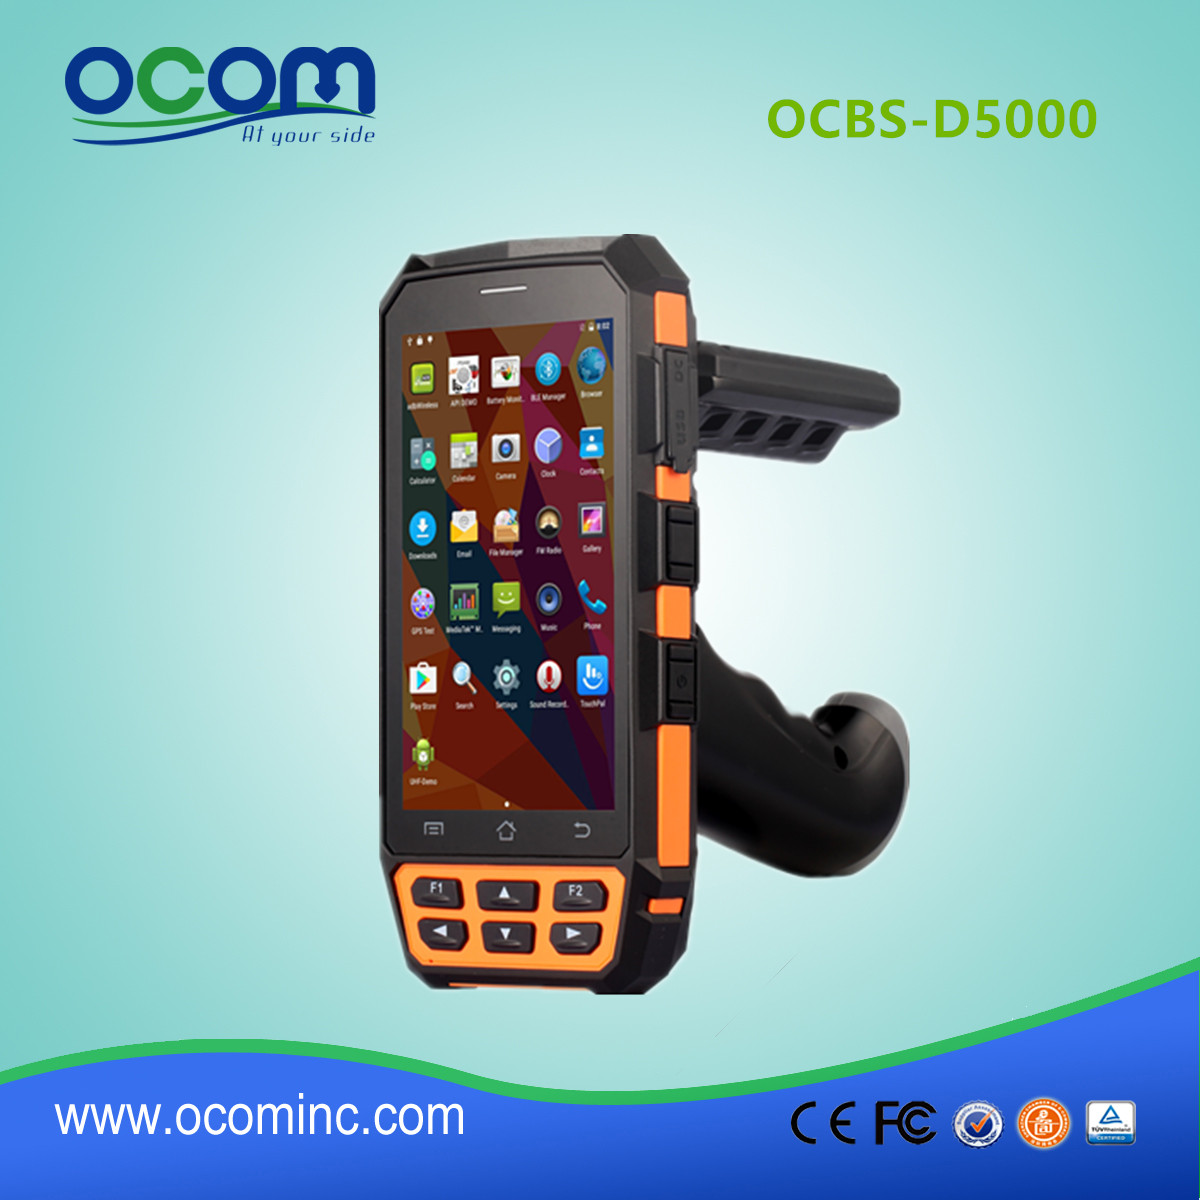 OCBS-D5000 courrier qr scanner de code androïde pda avec poignée pistolet